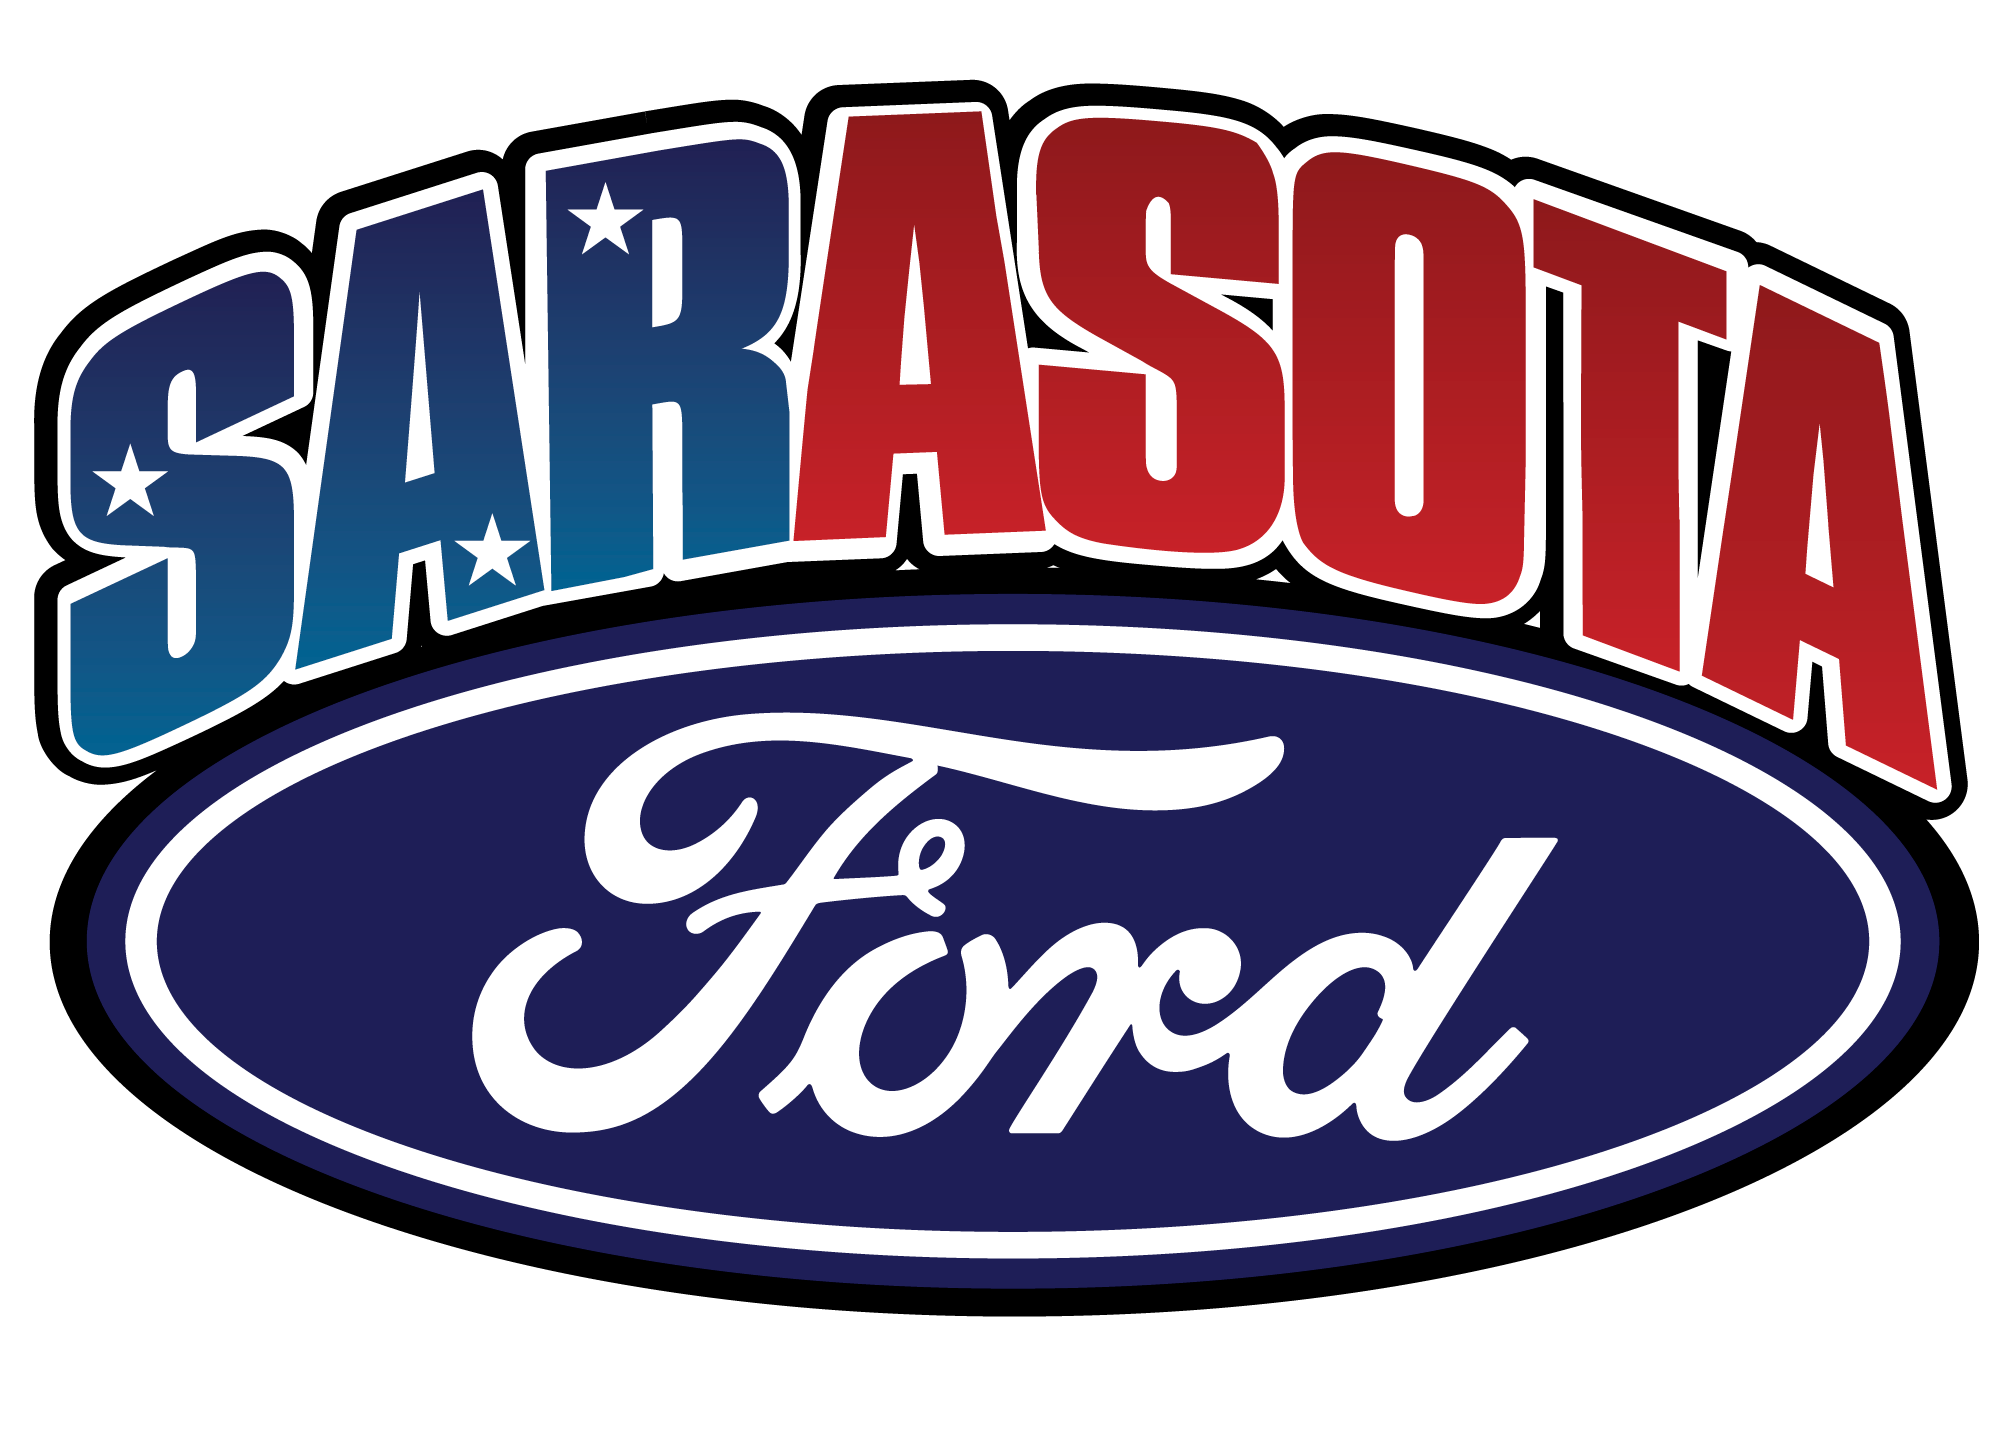 Sarasota Ford